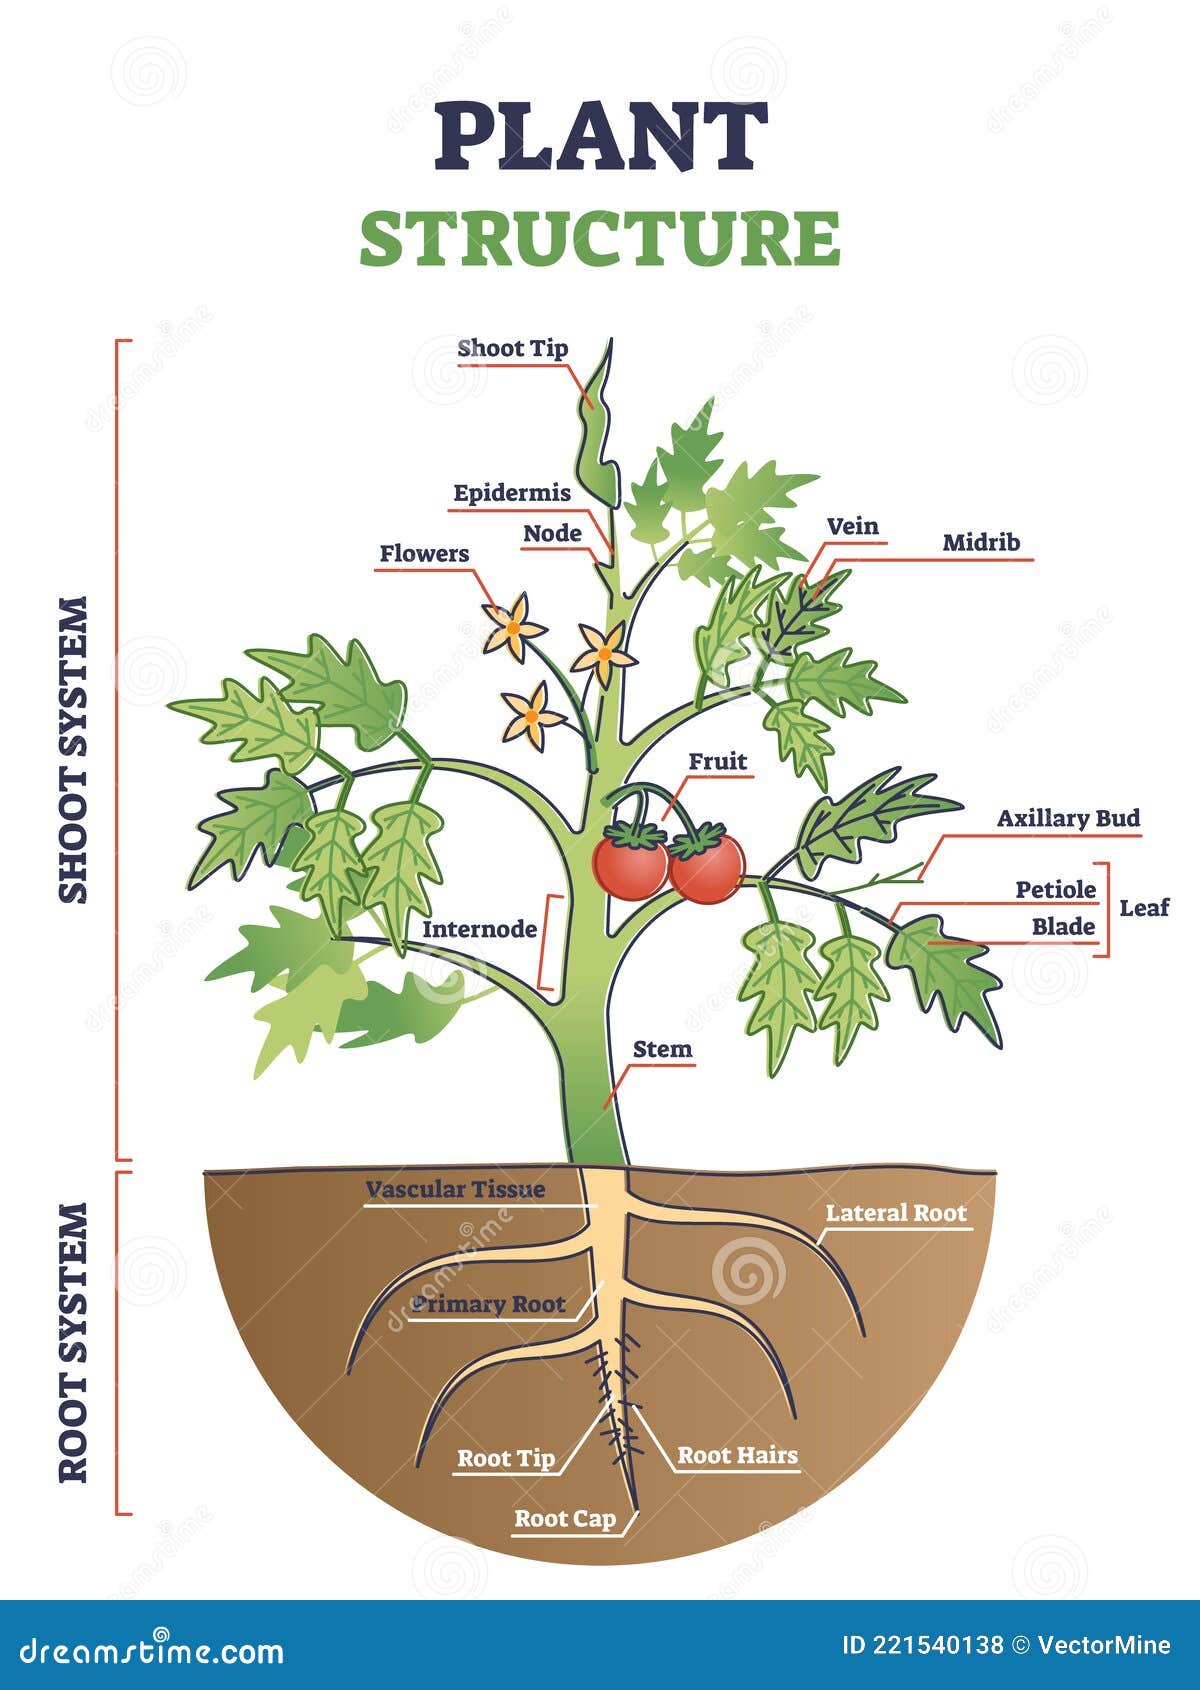 Plant structure. Структура растения. Строение растения инфографика. Stem root and Leaf structure. Схема строения растения для дошкольников в таблице.